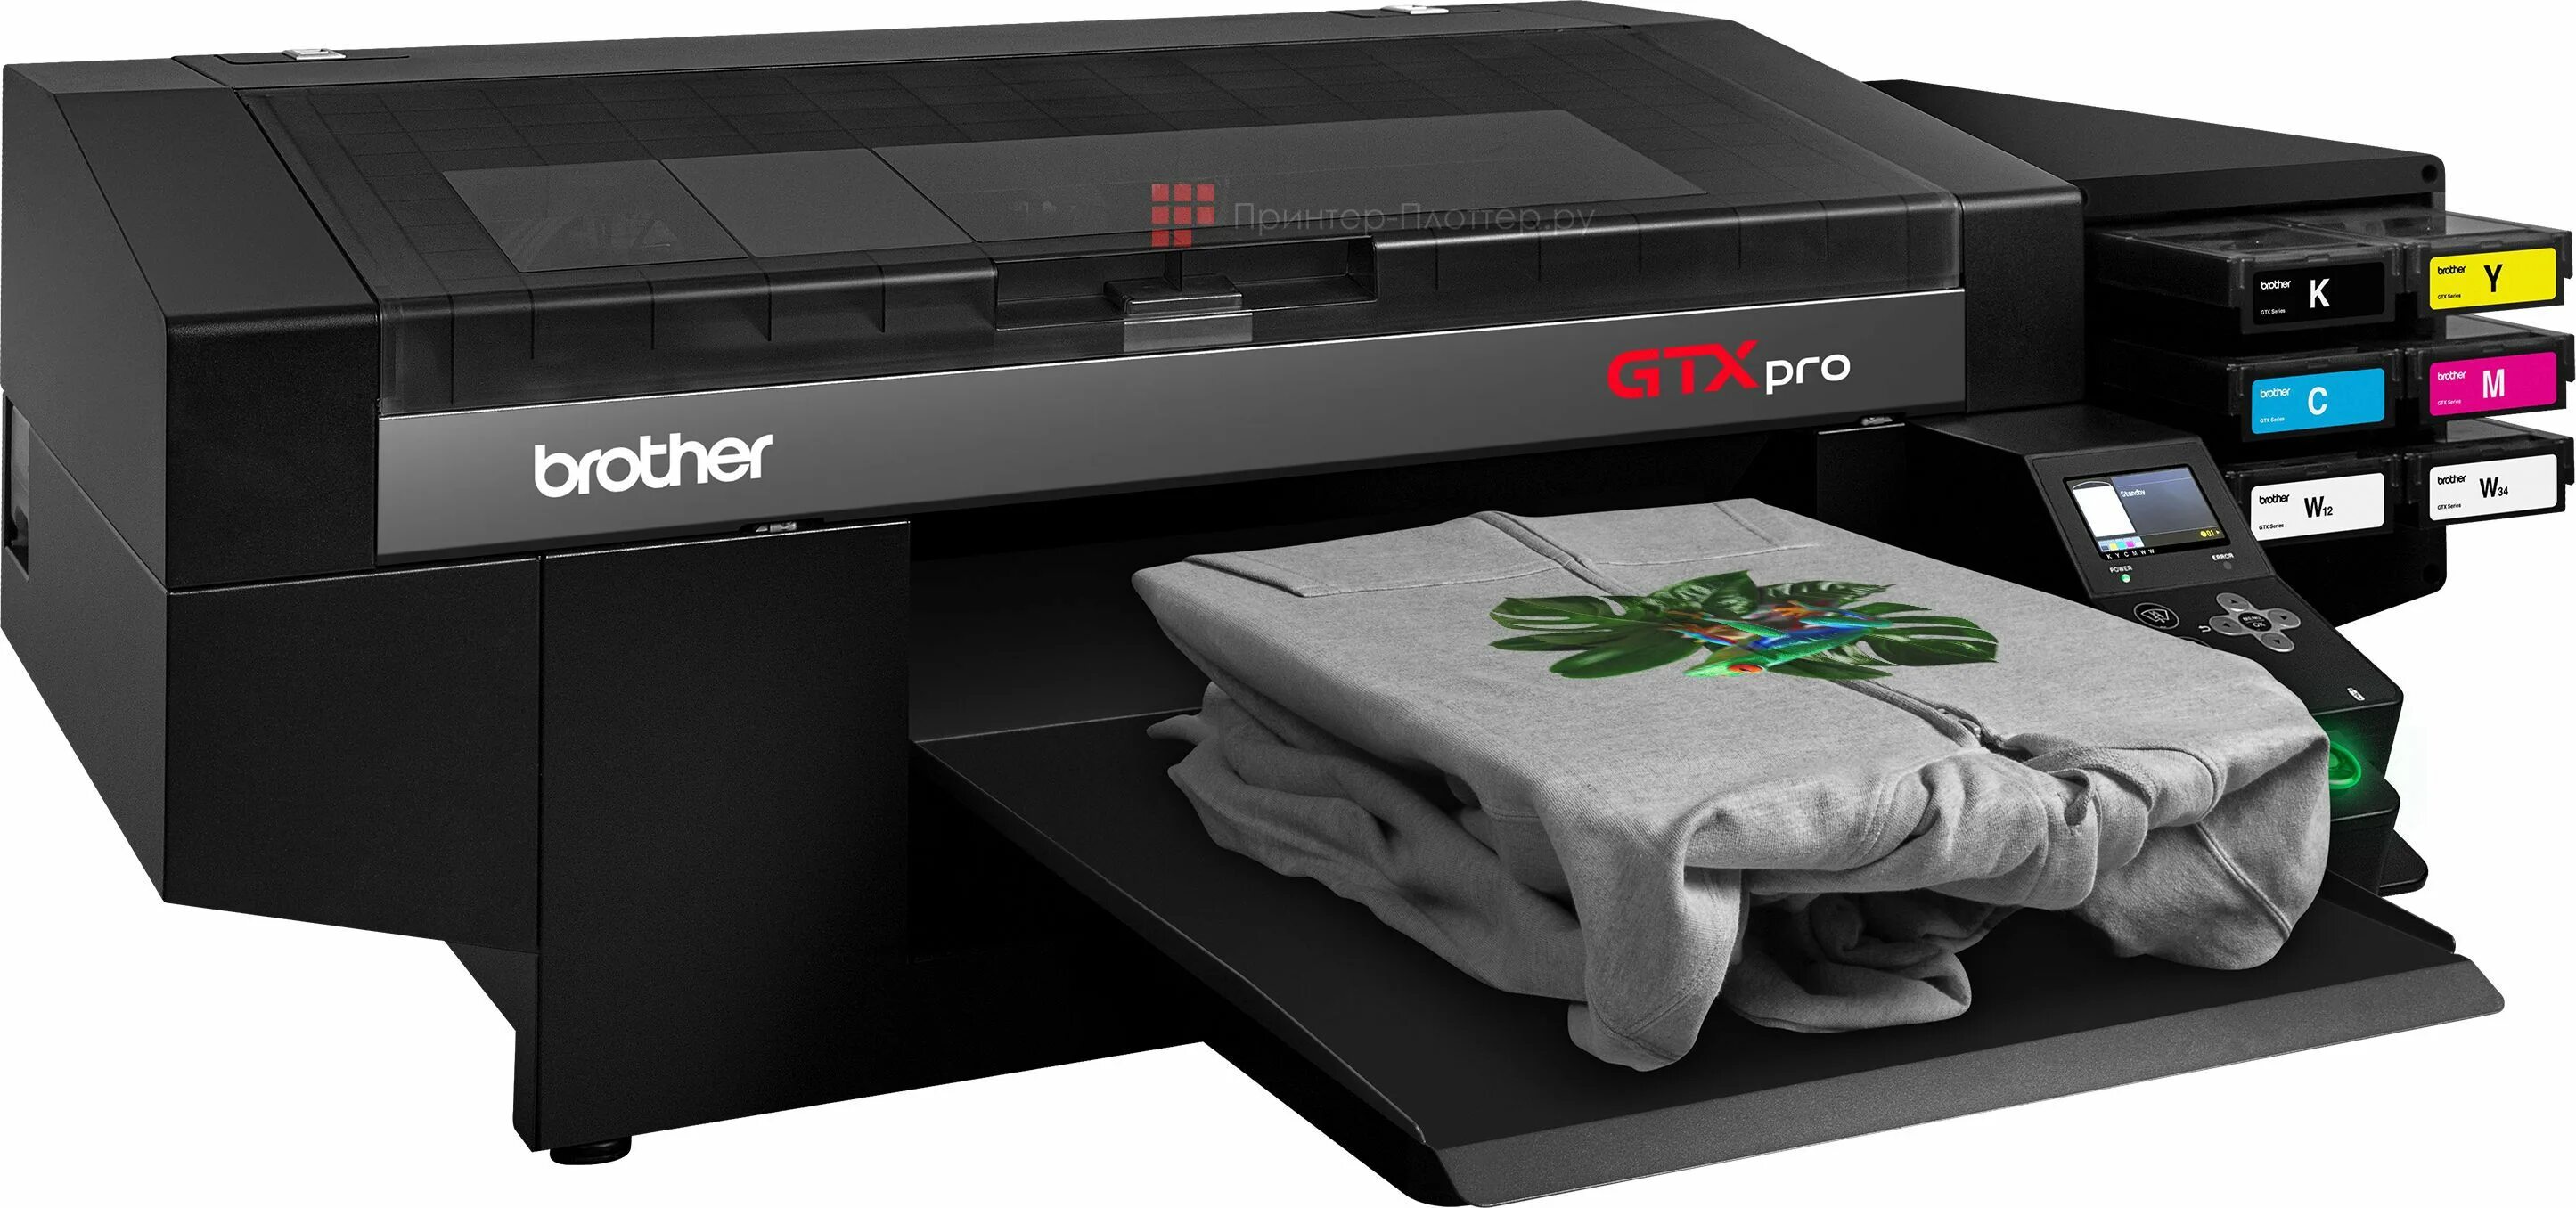 Brother GTX 423 Pro. Текстильный принтер Бразер GTX. Текстильный принтер DTG Pro. Brother GTX-423 (GTX Pro). Brother print